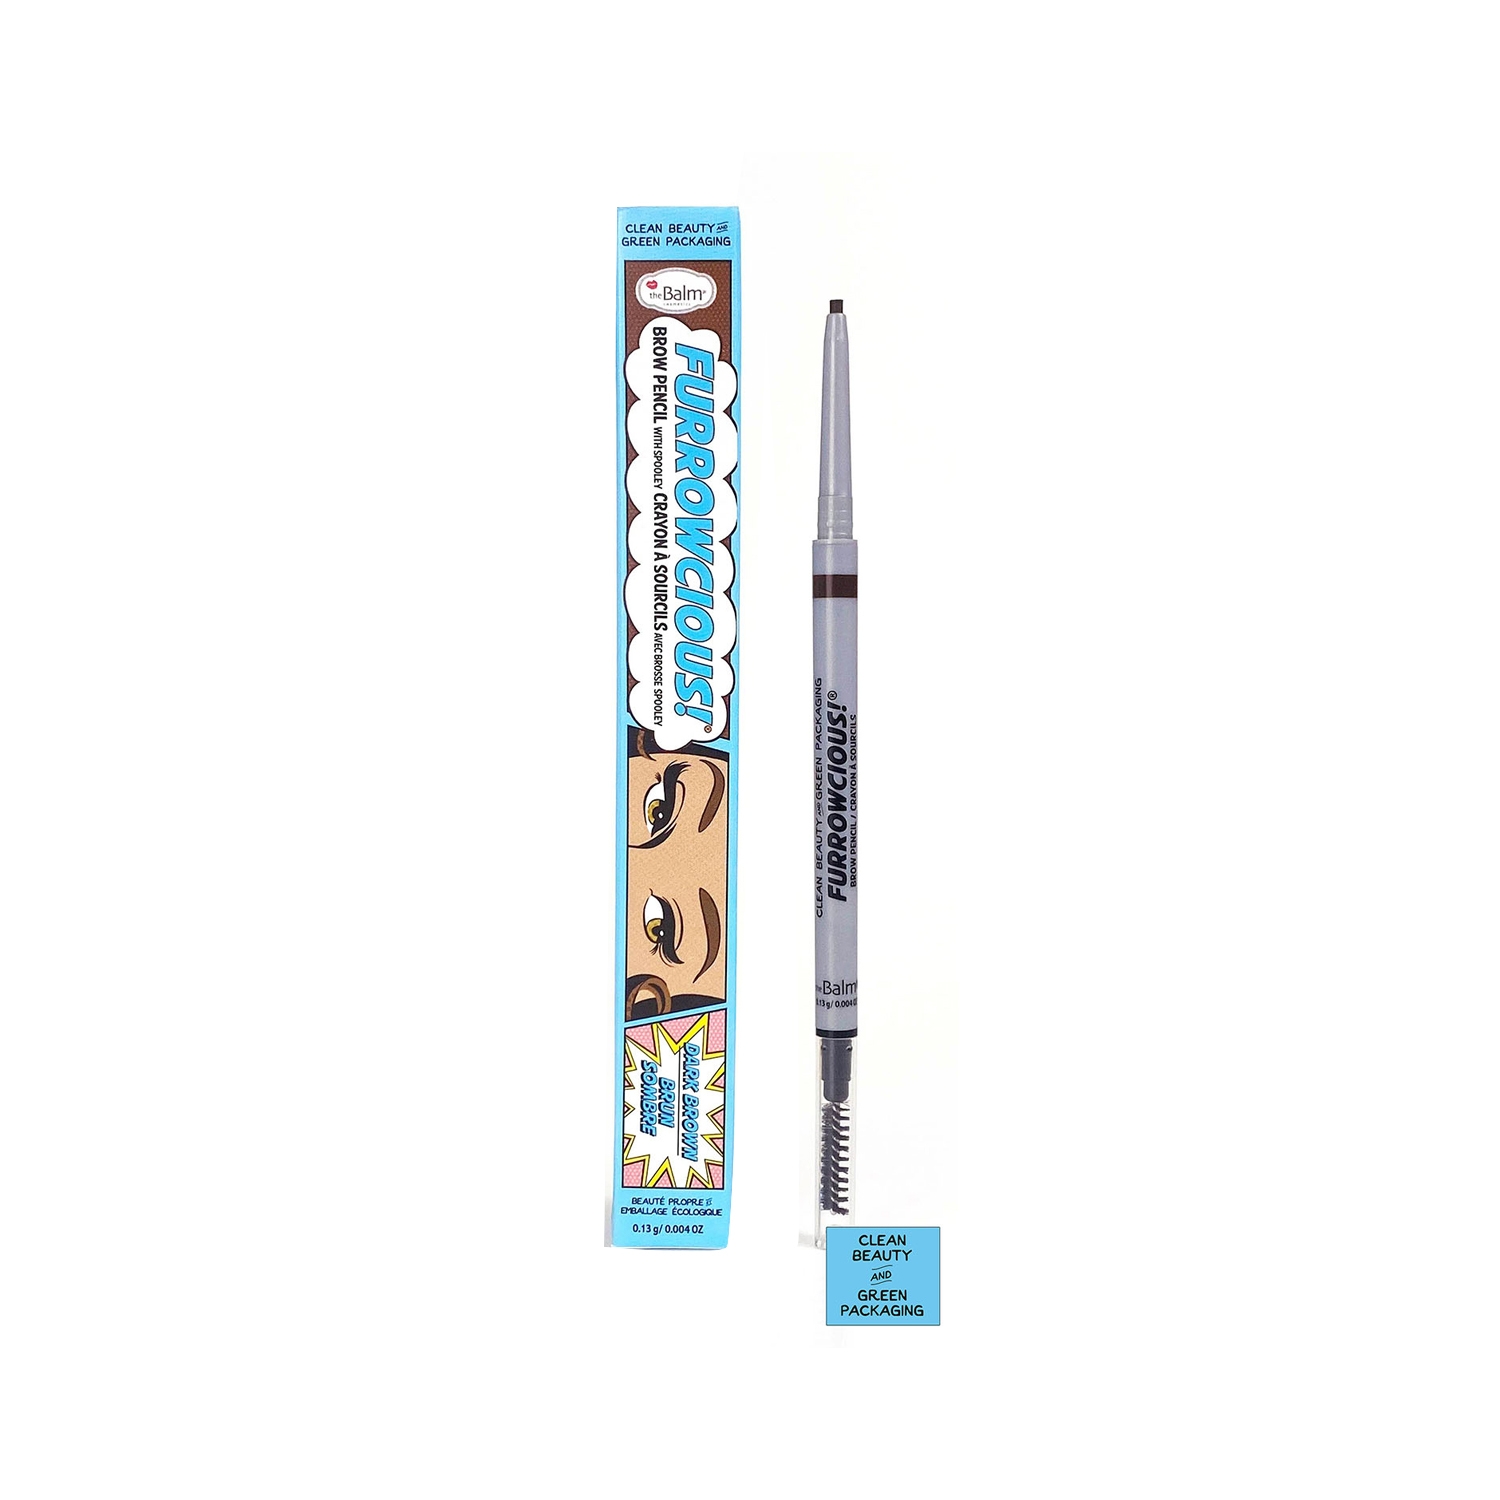 theBalm Cosmetics | theBalm Cosmetics Furrowcious Brow Pencil With Spoolie - Dark Brown (0.09g)